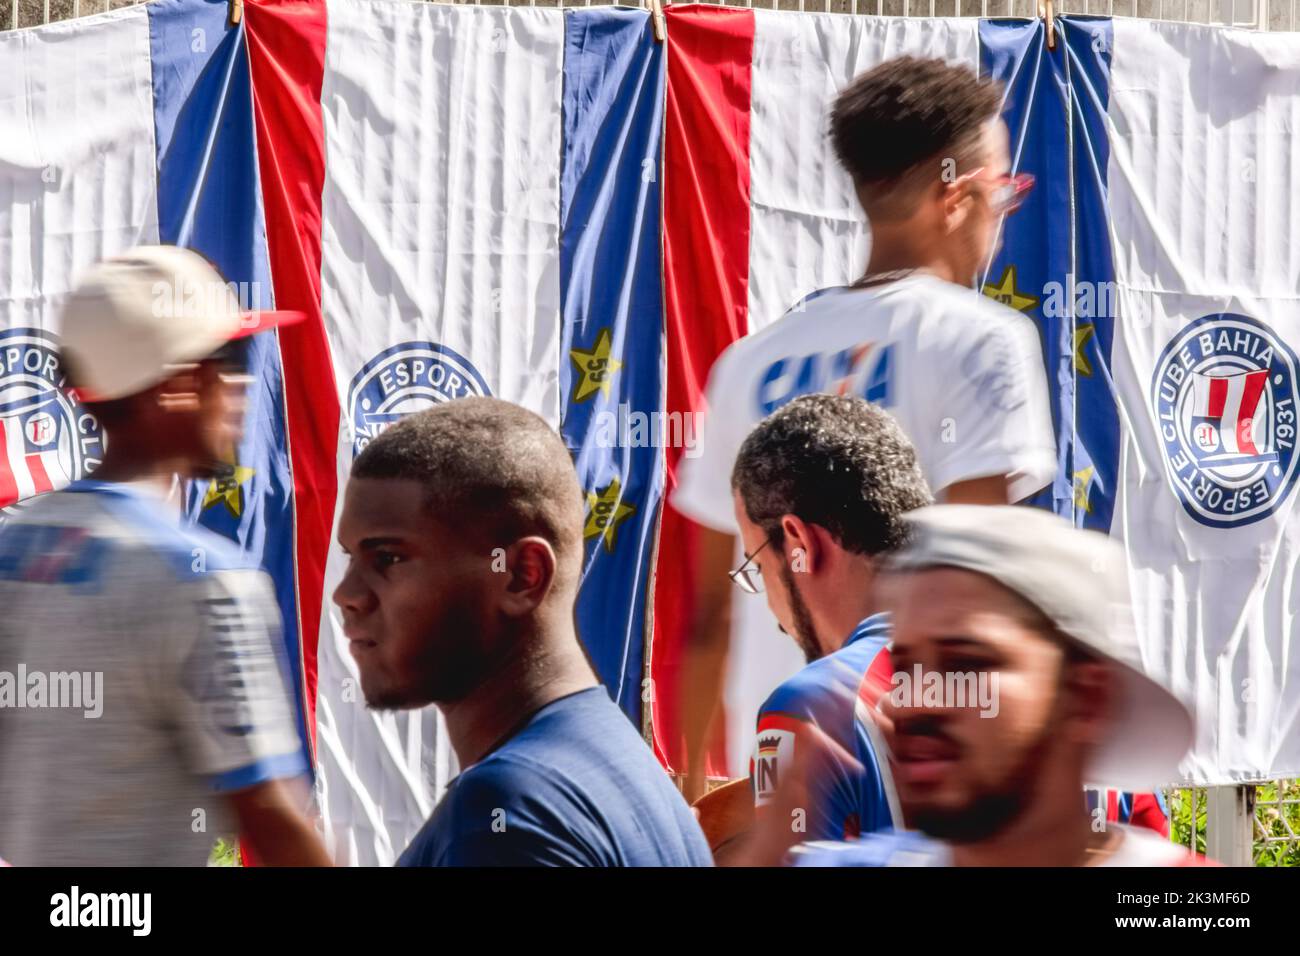 Salvador, Bahia, Brazil - April 01, 2018: Esporte Clube Bahia fans are seen before the game at Fonte Nova Arena. Salvador, Bahia. Stock Photo